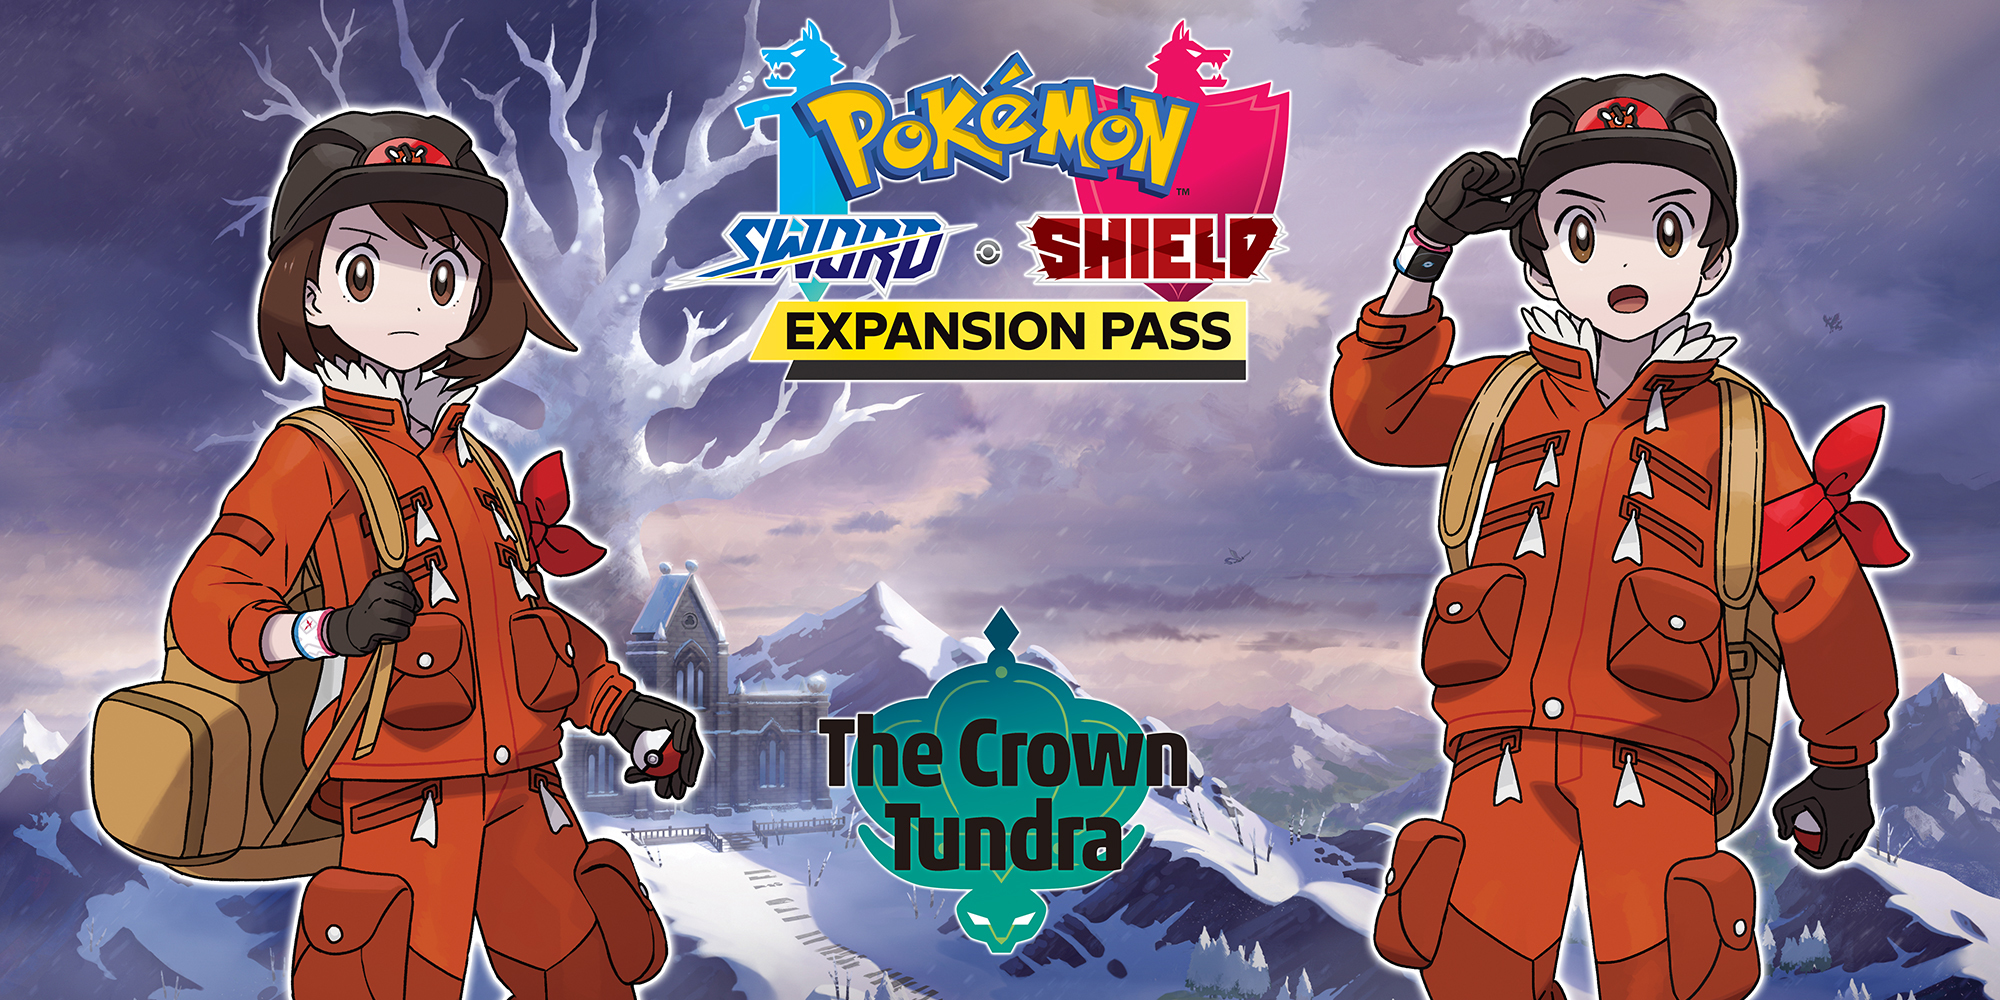 DLC Review - Pokémon Sword/Shield: The Crown Tundra